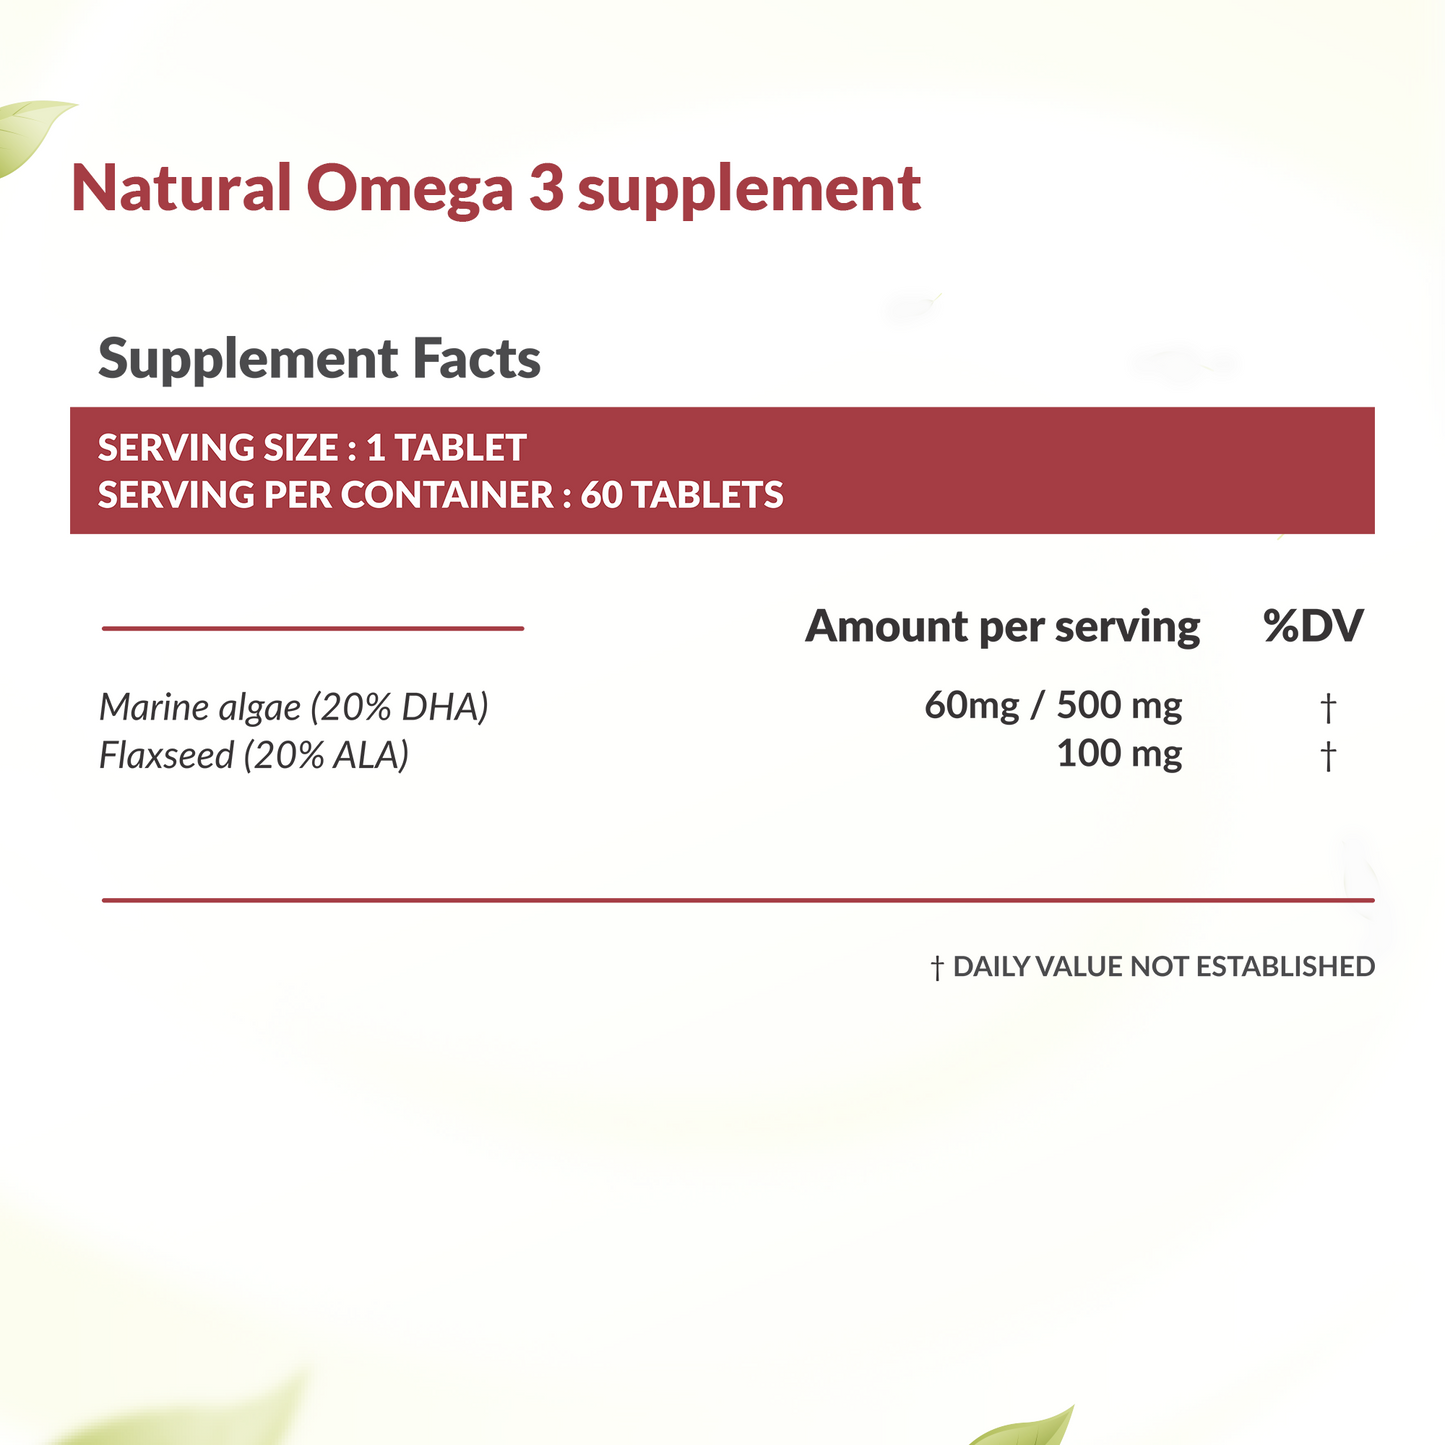 Natural Vit B12 supplement + Natural Omega 3 supplement